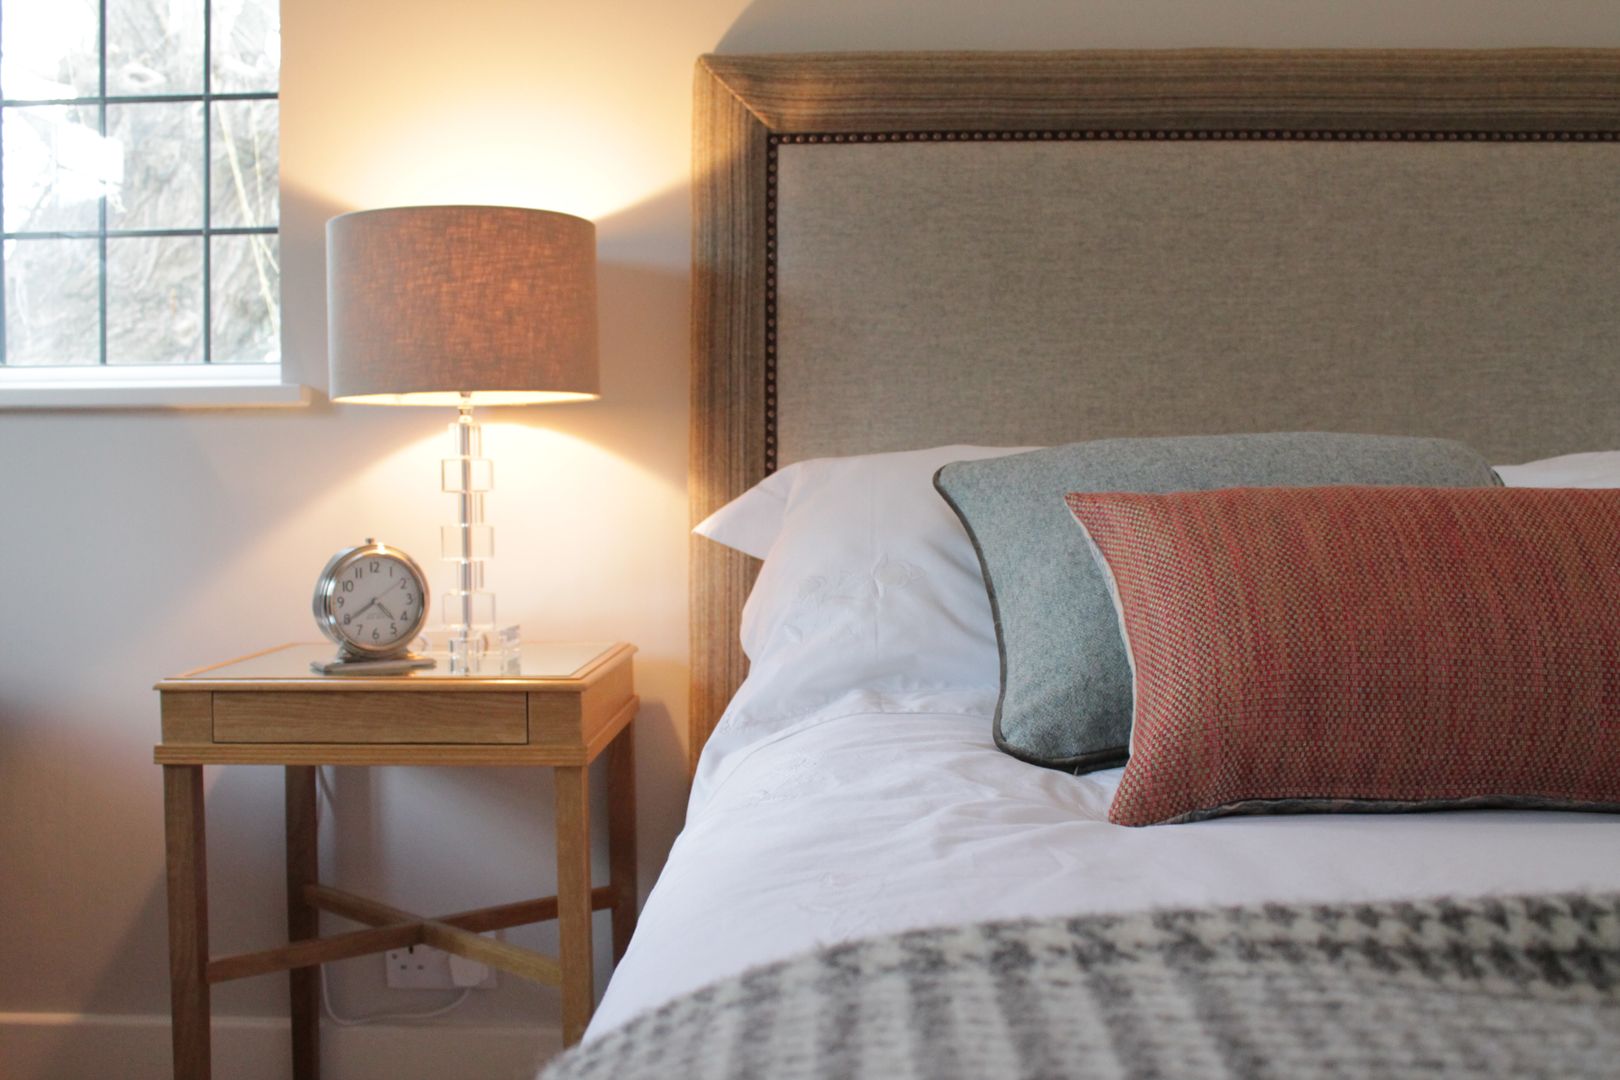 Bainbridge Luxury Upholstered Bed with designer details TurnPost Dormitorios de estilo moderno Camas y cabeceras